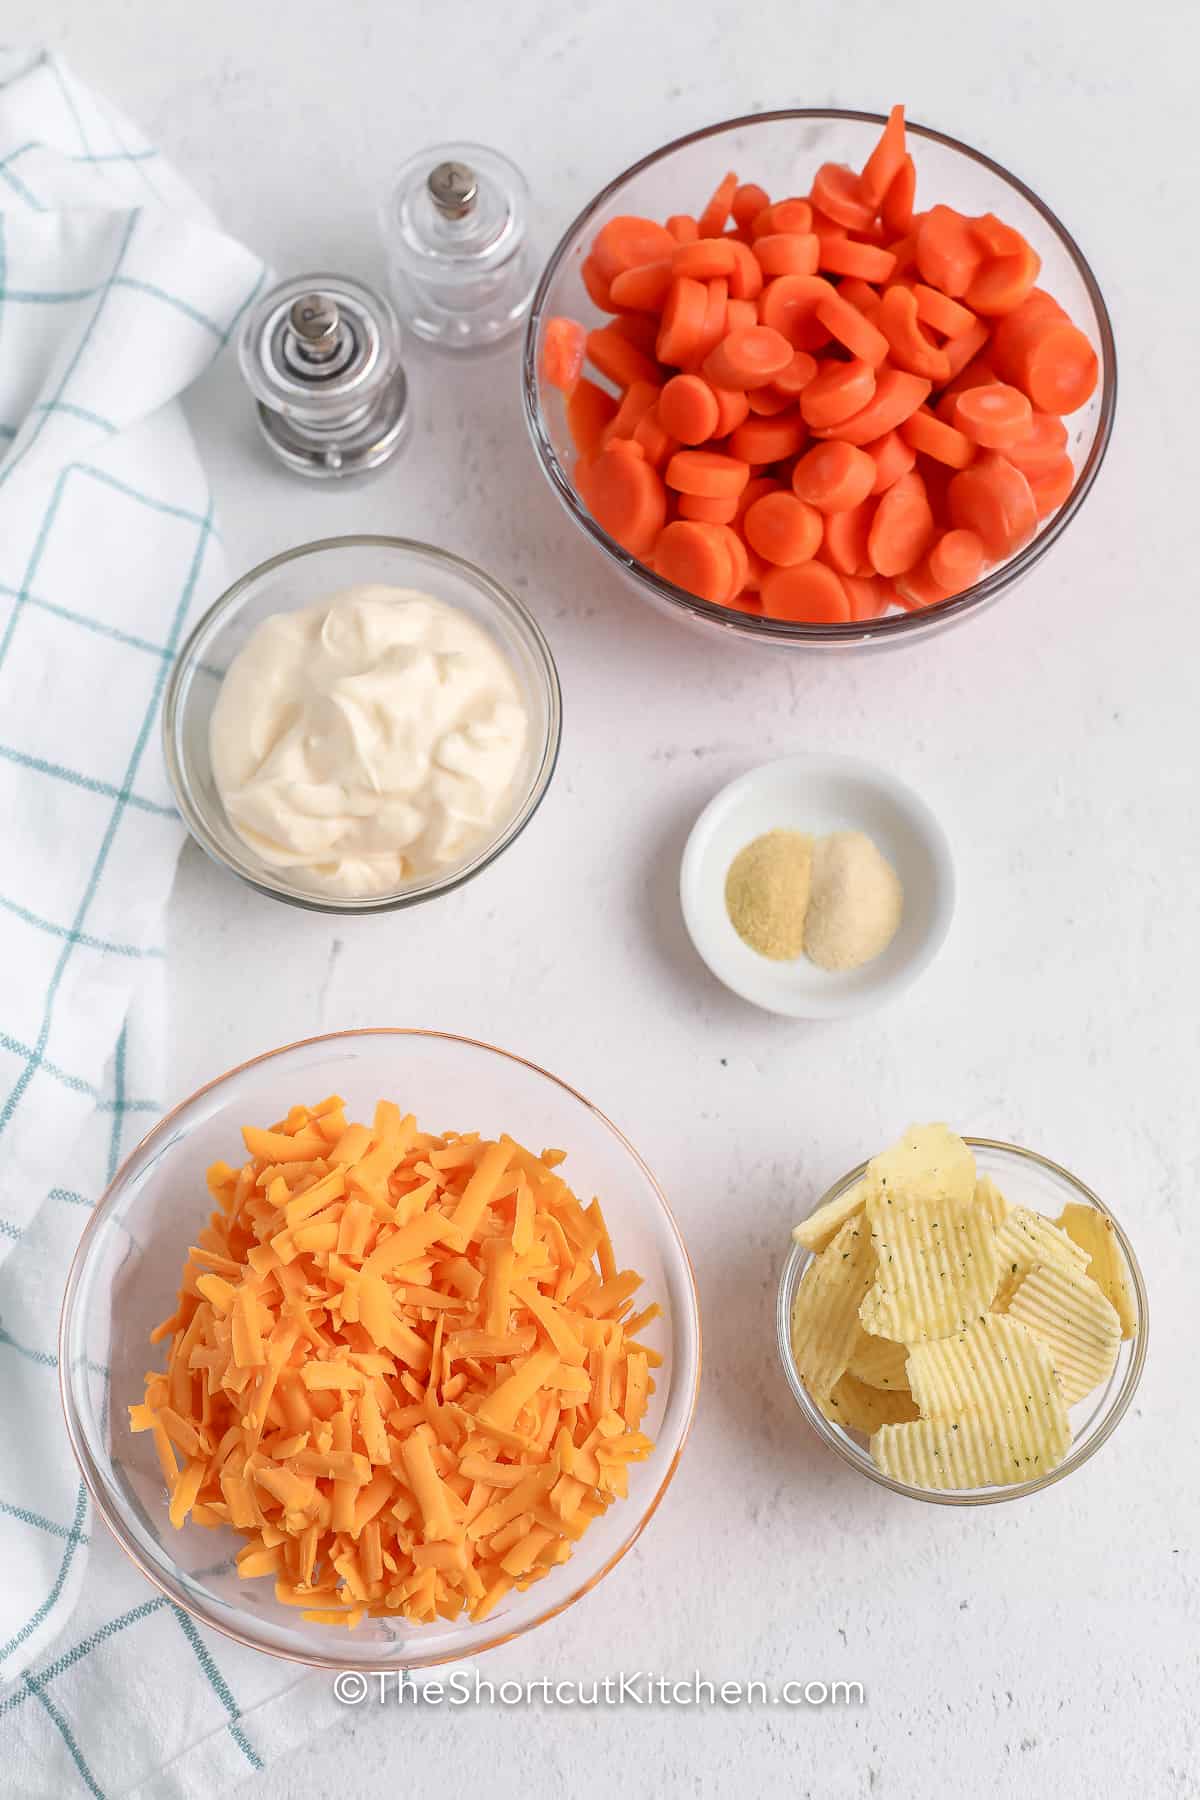 Carrot Casserole Ingredients